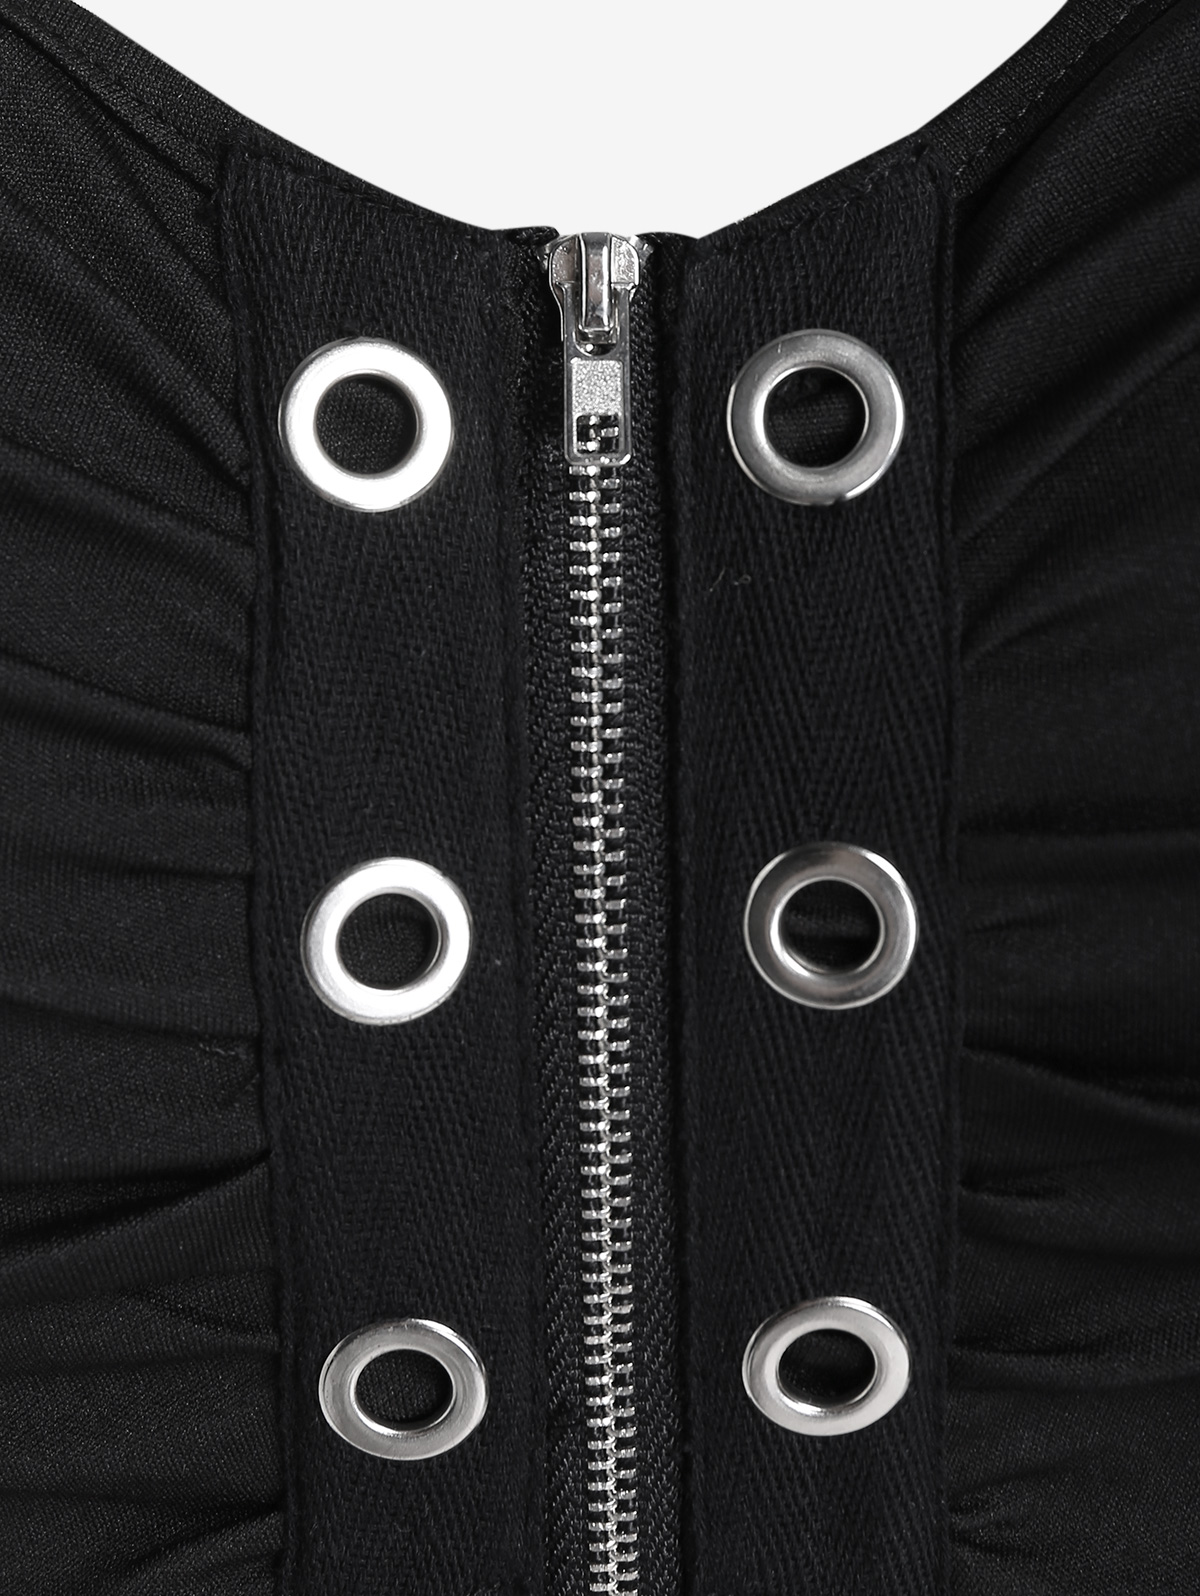 ROSEGAL Gothic Full Zipper Grommets Camis Tops Buckle Strap Plaid Vest For Women Summer Sweetheart Neck Empire Waist Tanks 4XL